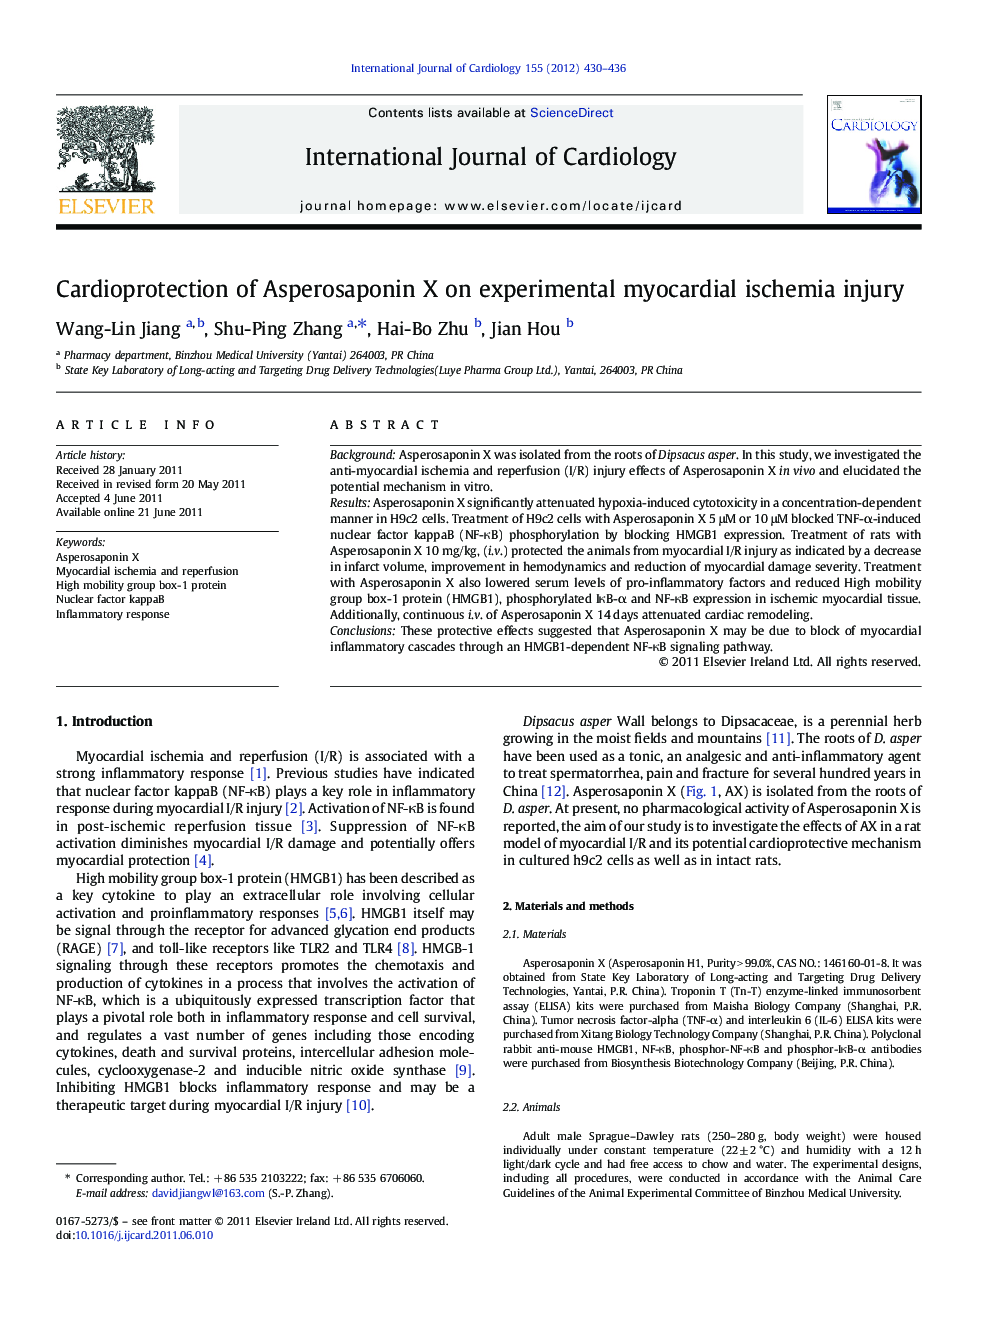 Cardioprotection of Asperosaponin X on experimental myocardial ischemia injury